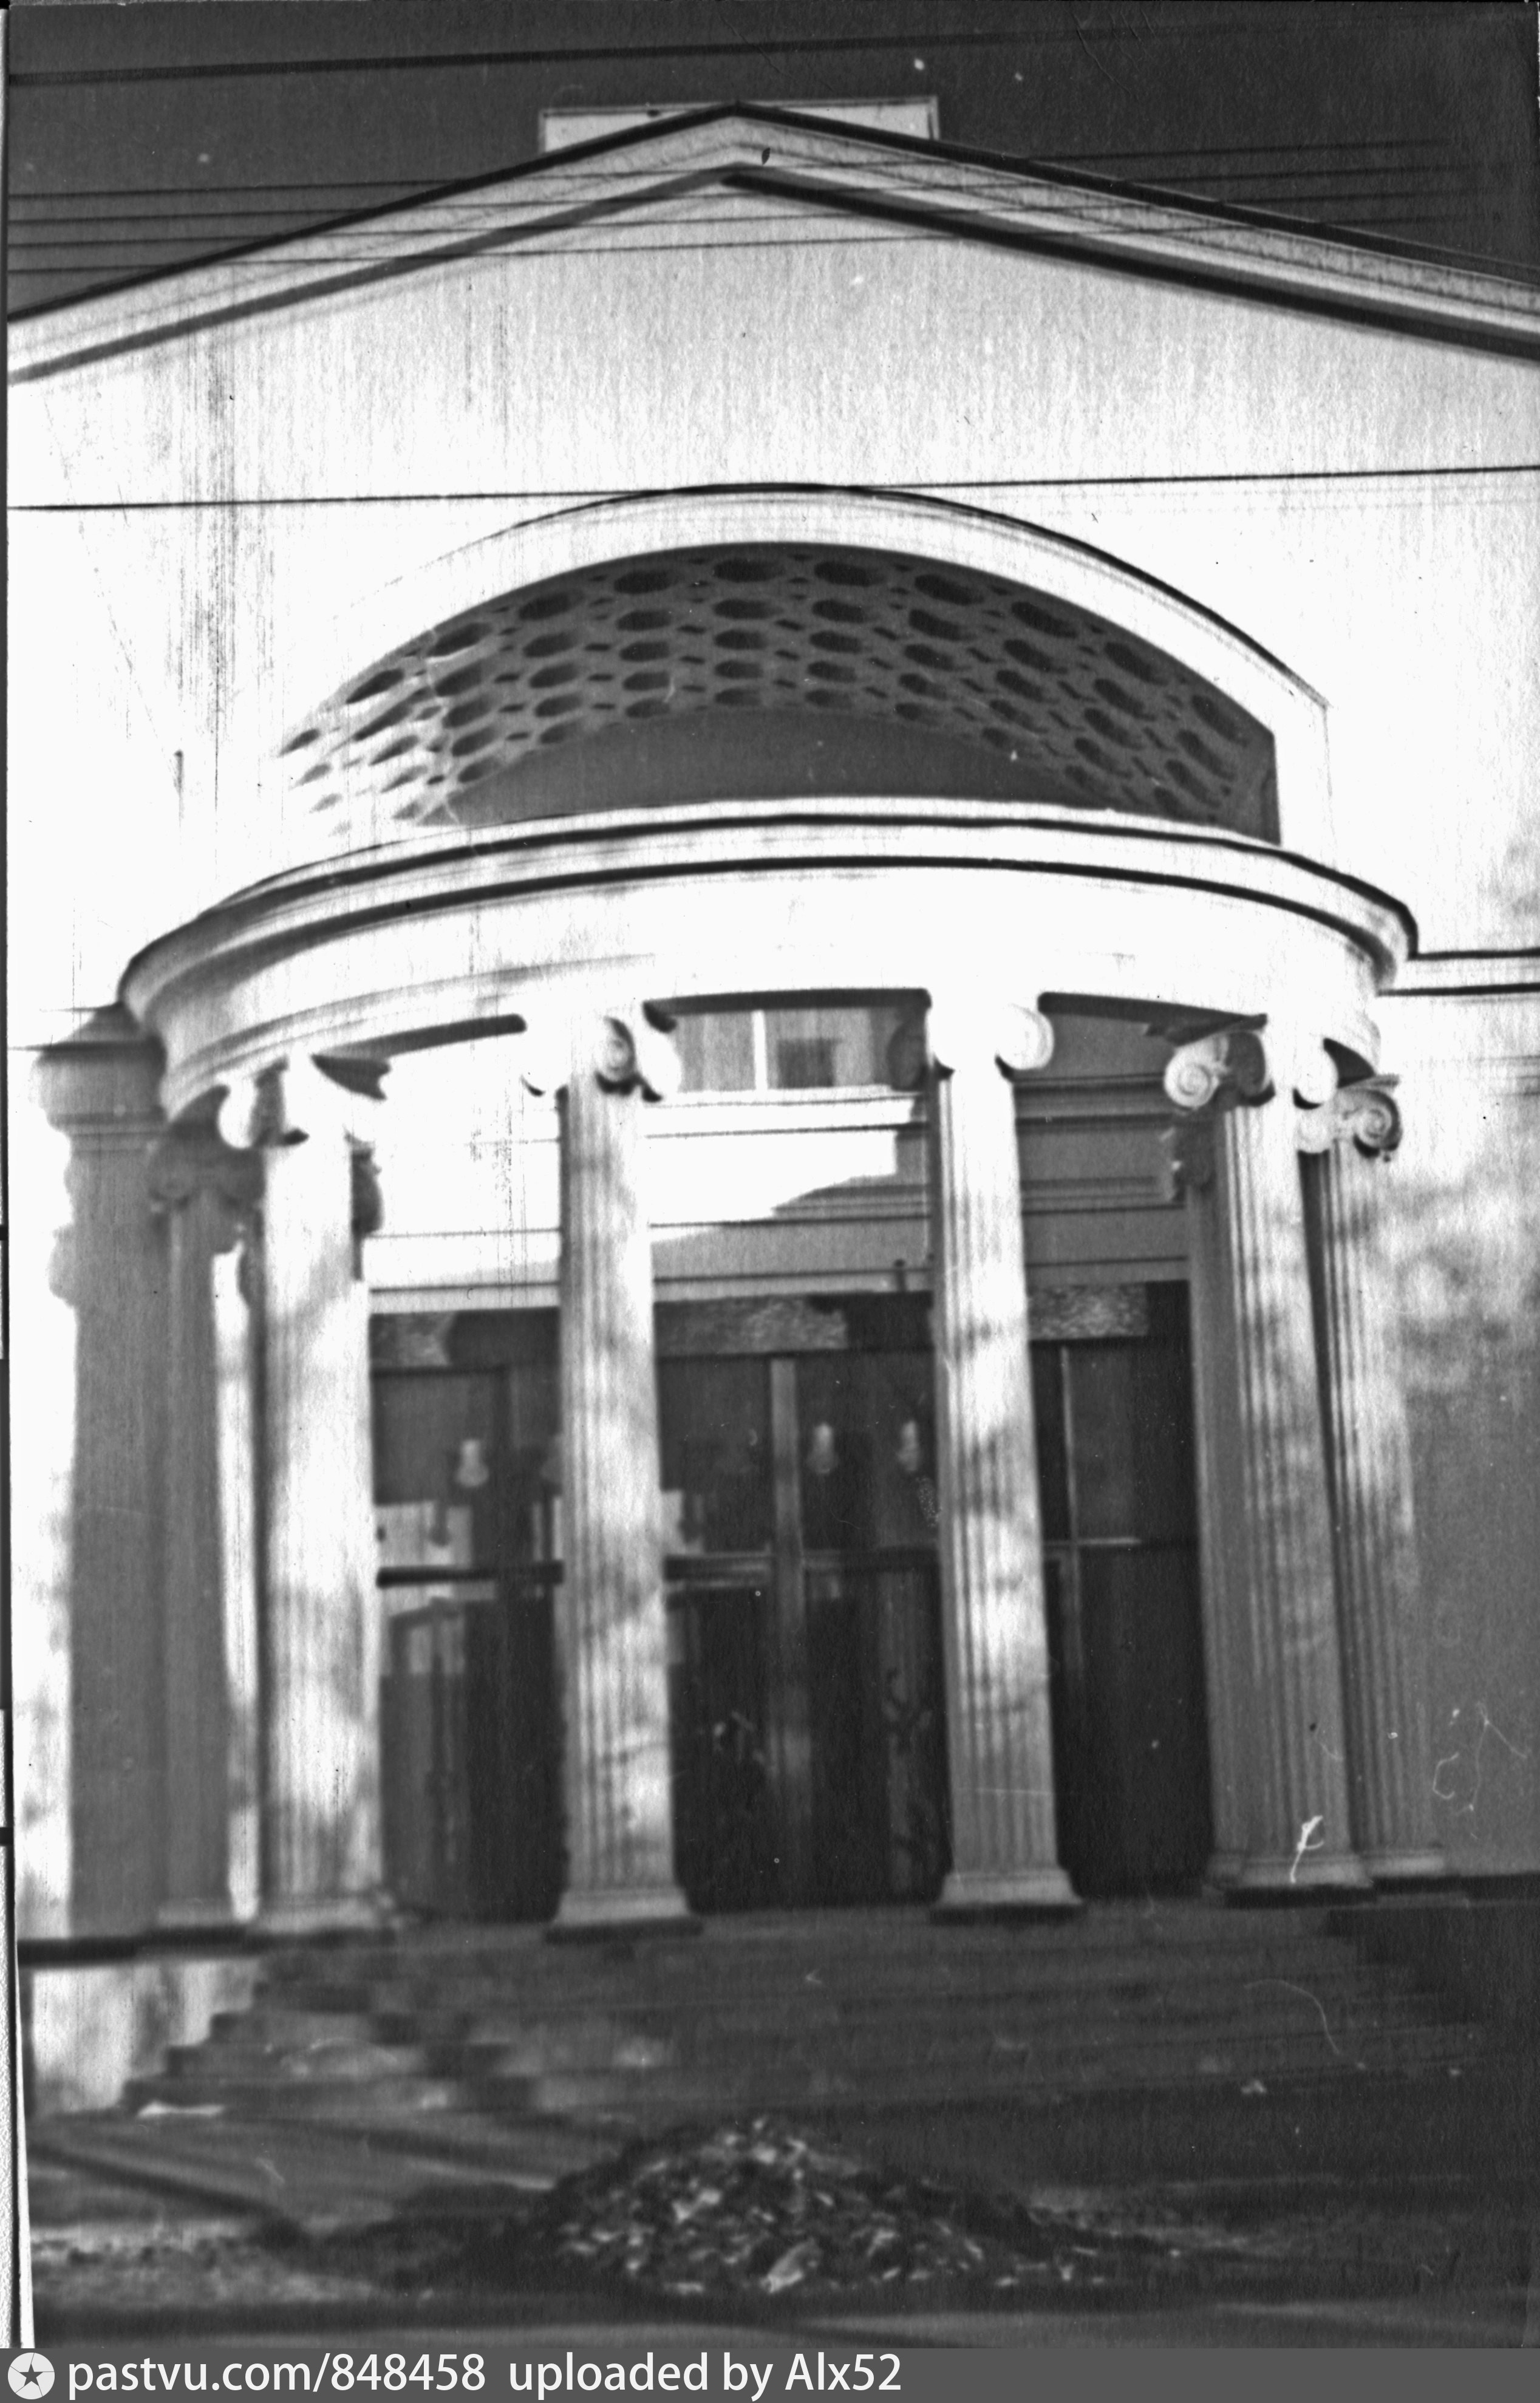 санкт петербург кинотеатр колизей